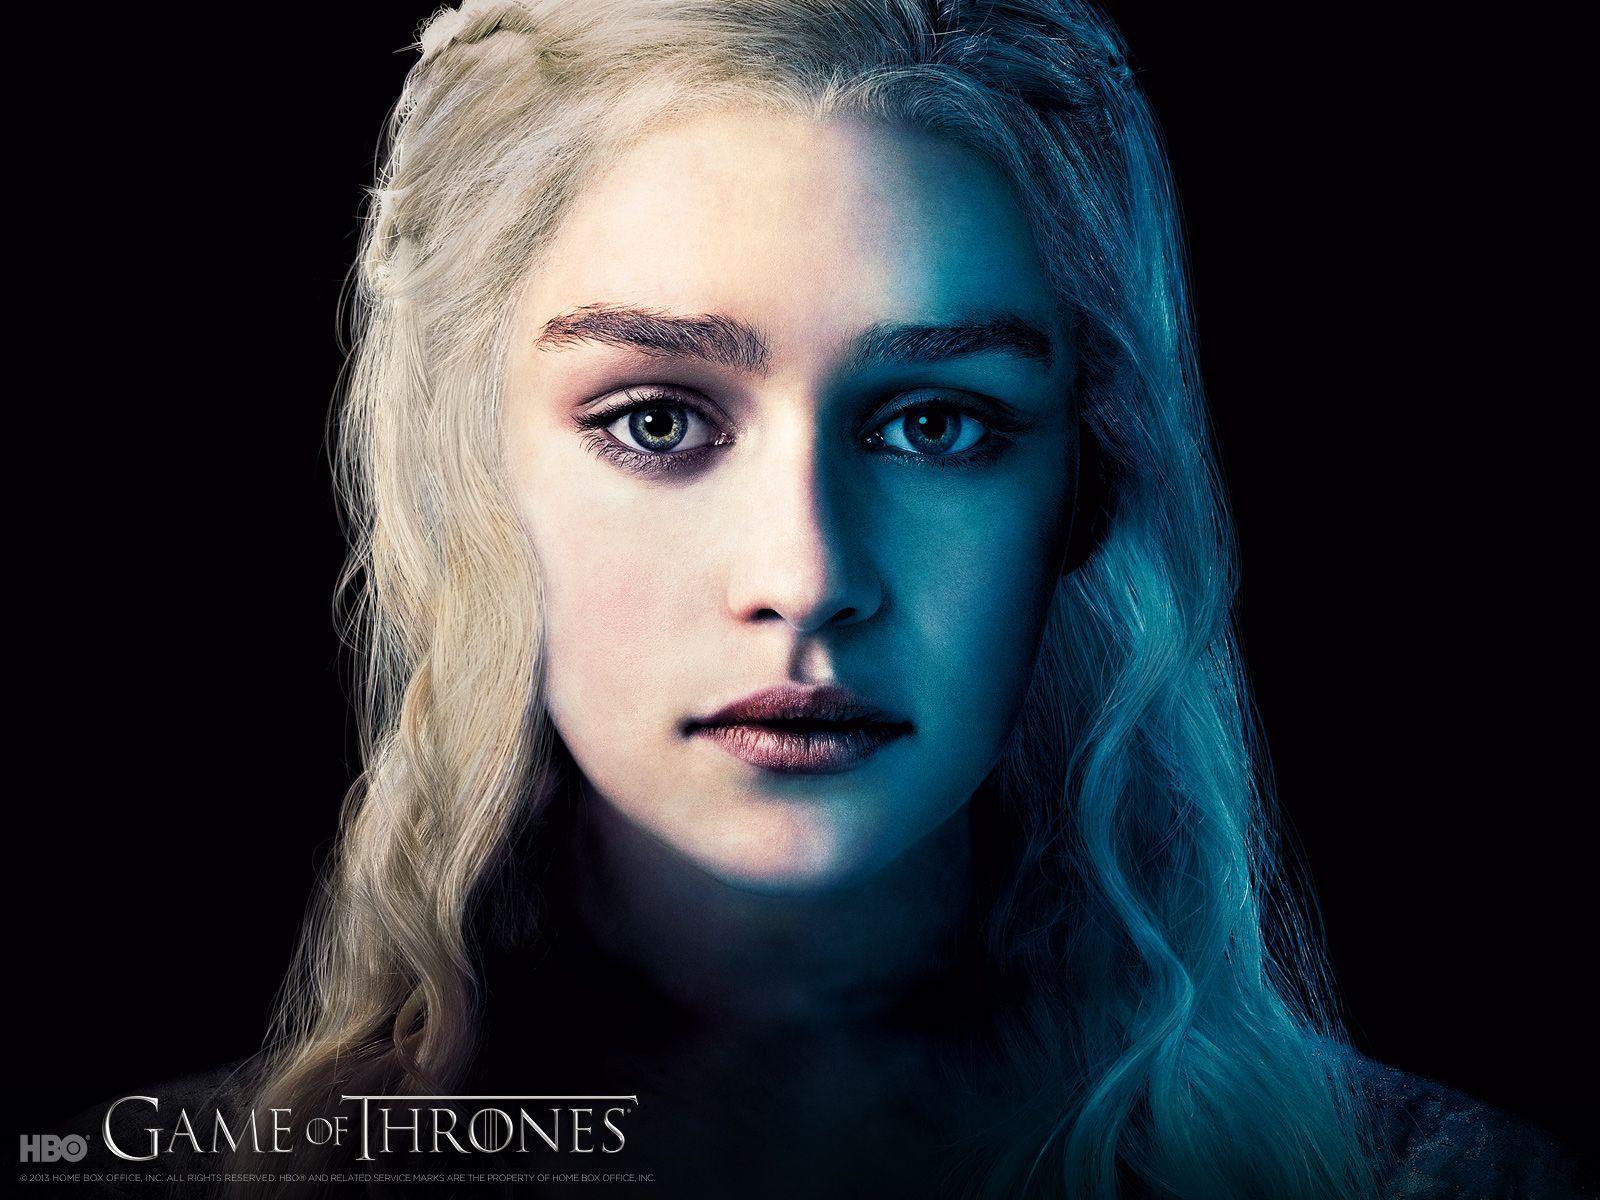 Game of Thrones Daenerys Targaryen Wallpaper. Full HD Picture